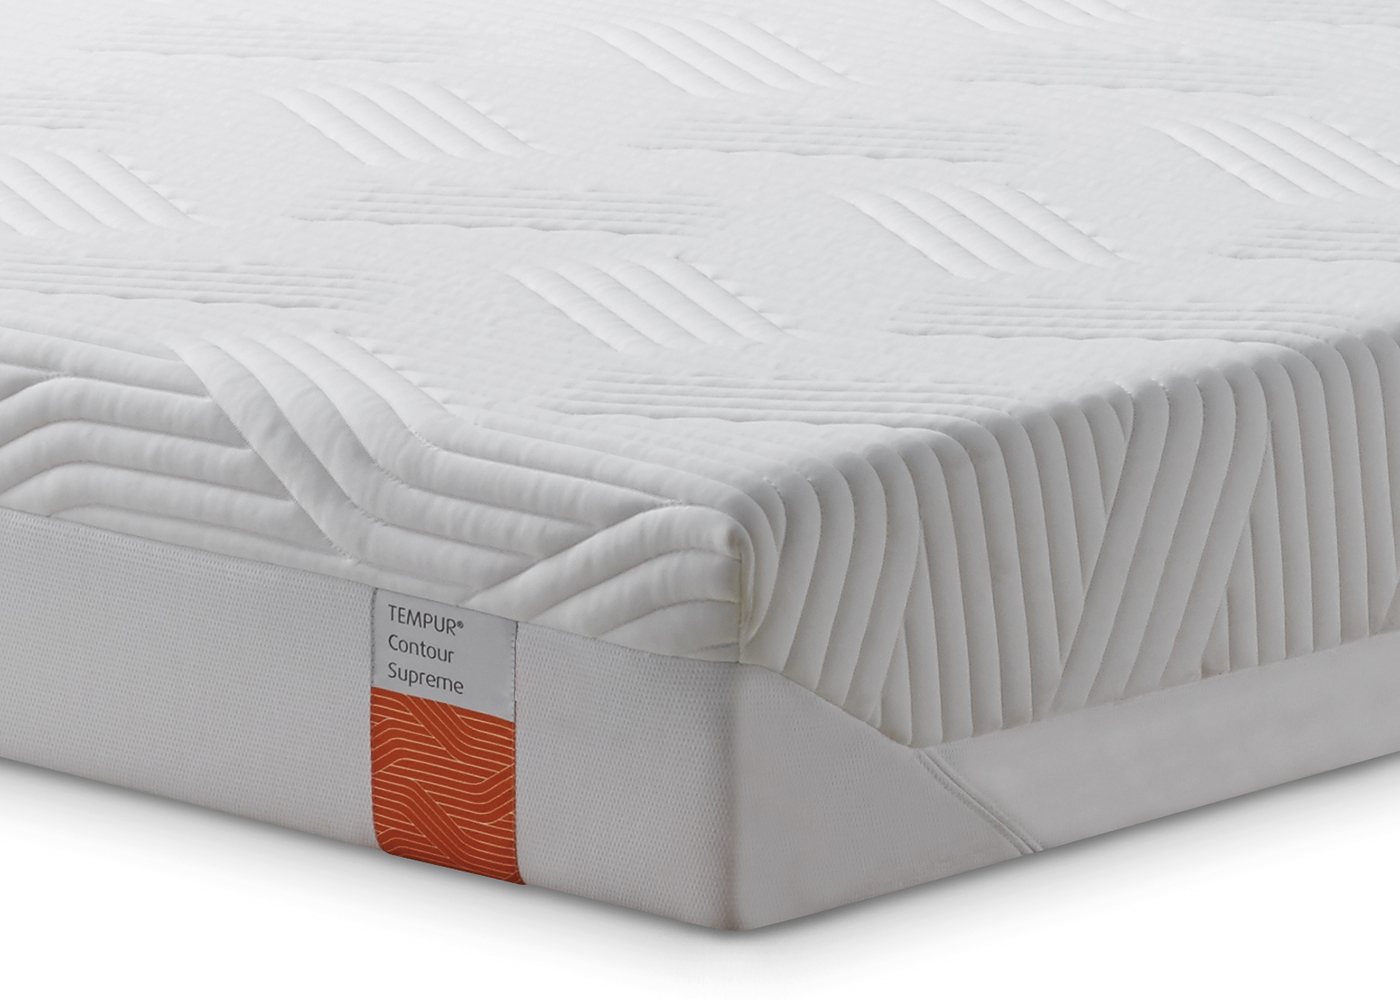 tempur-contour supreme king mattress price